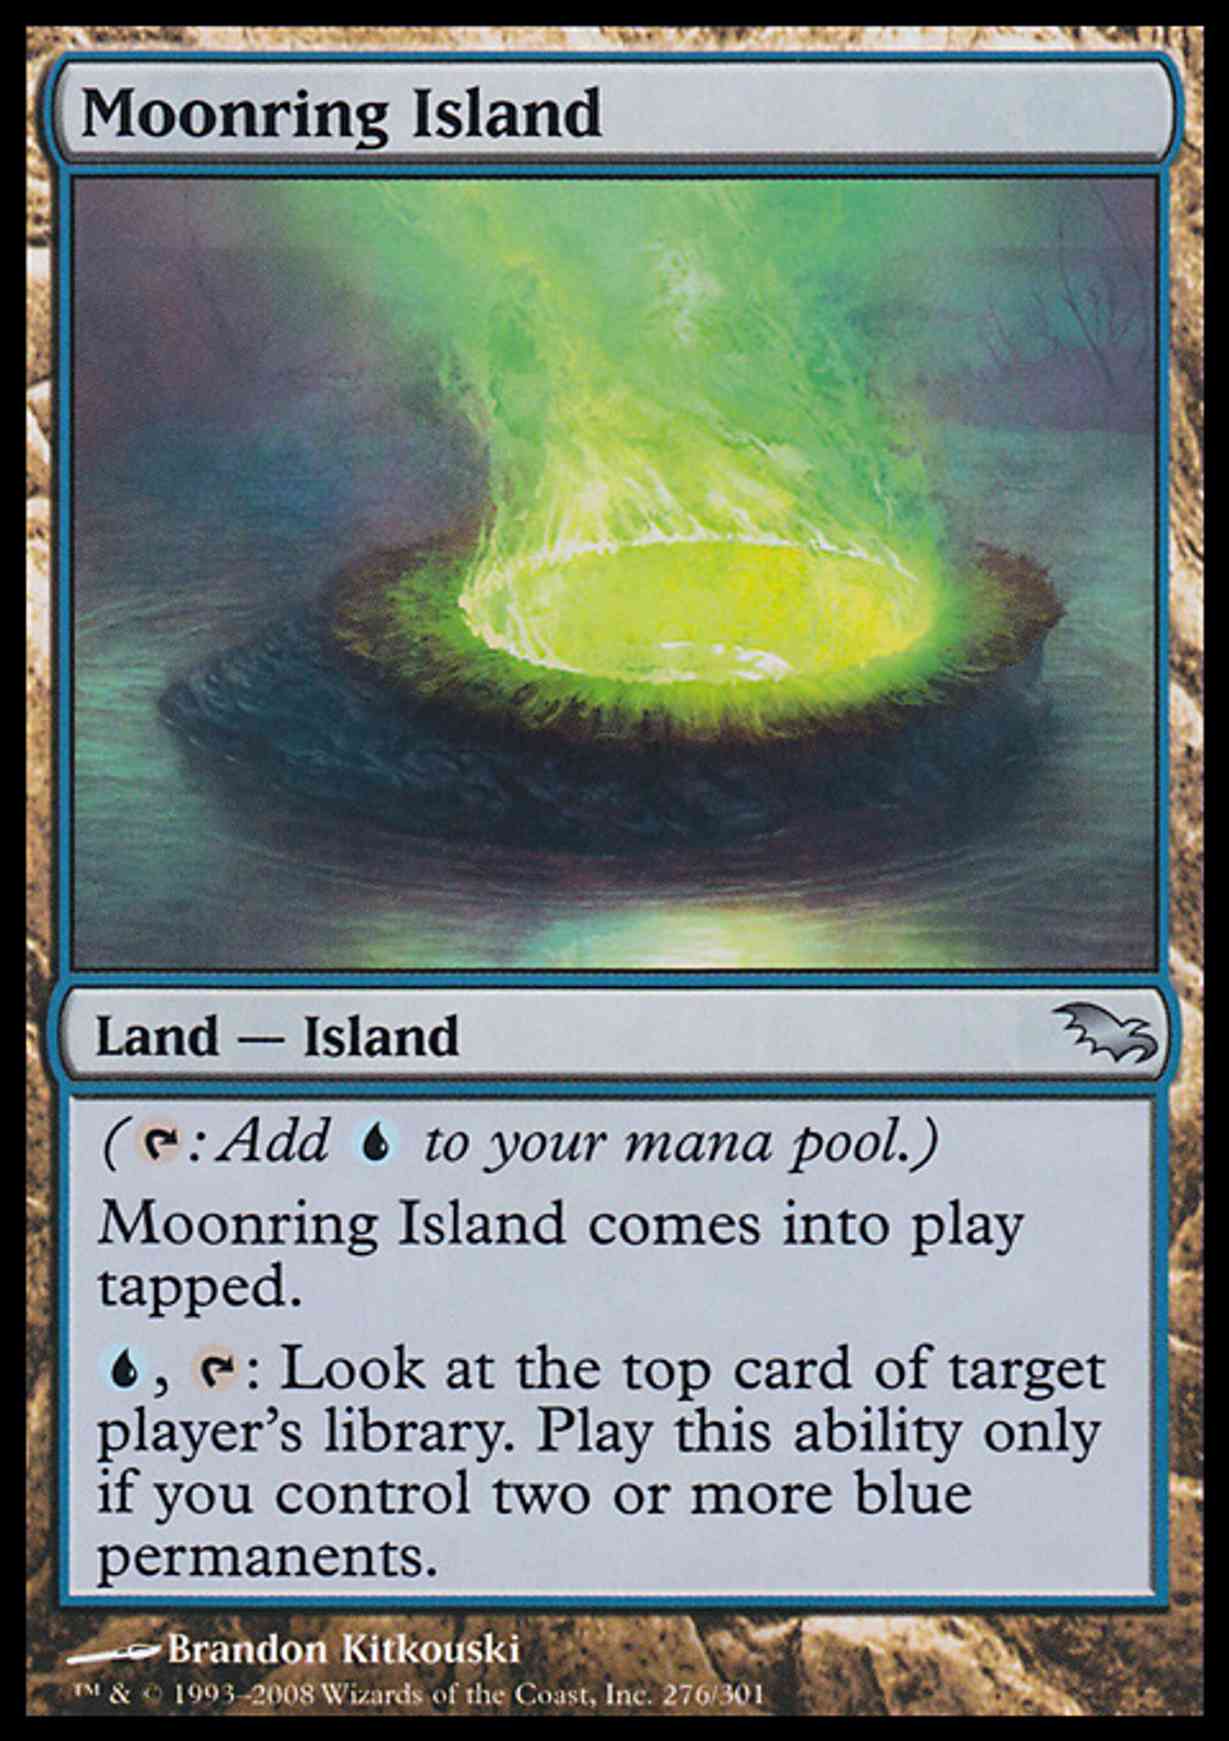 Moonring Island magic card front